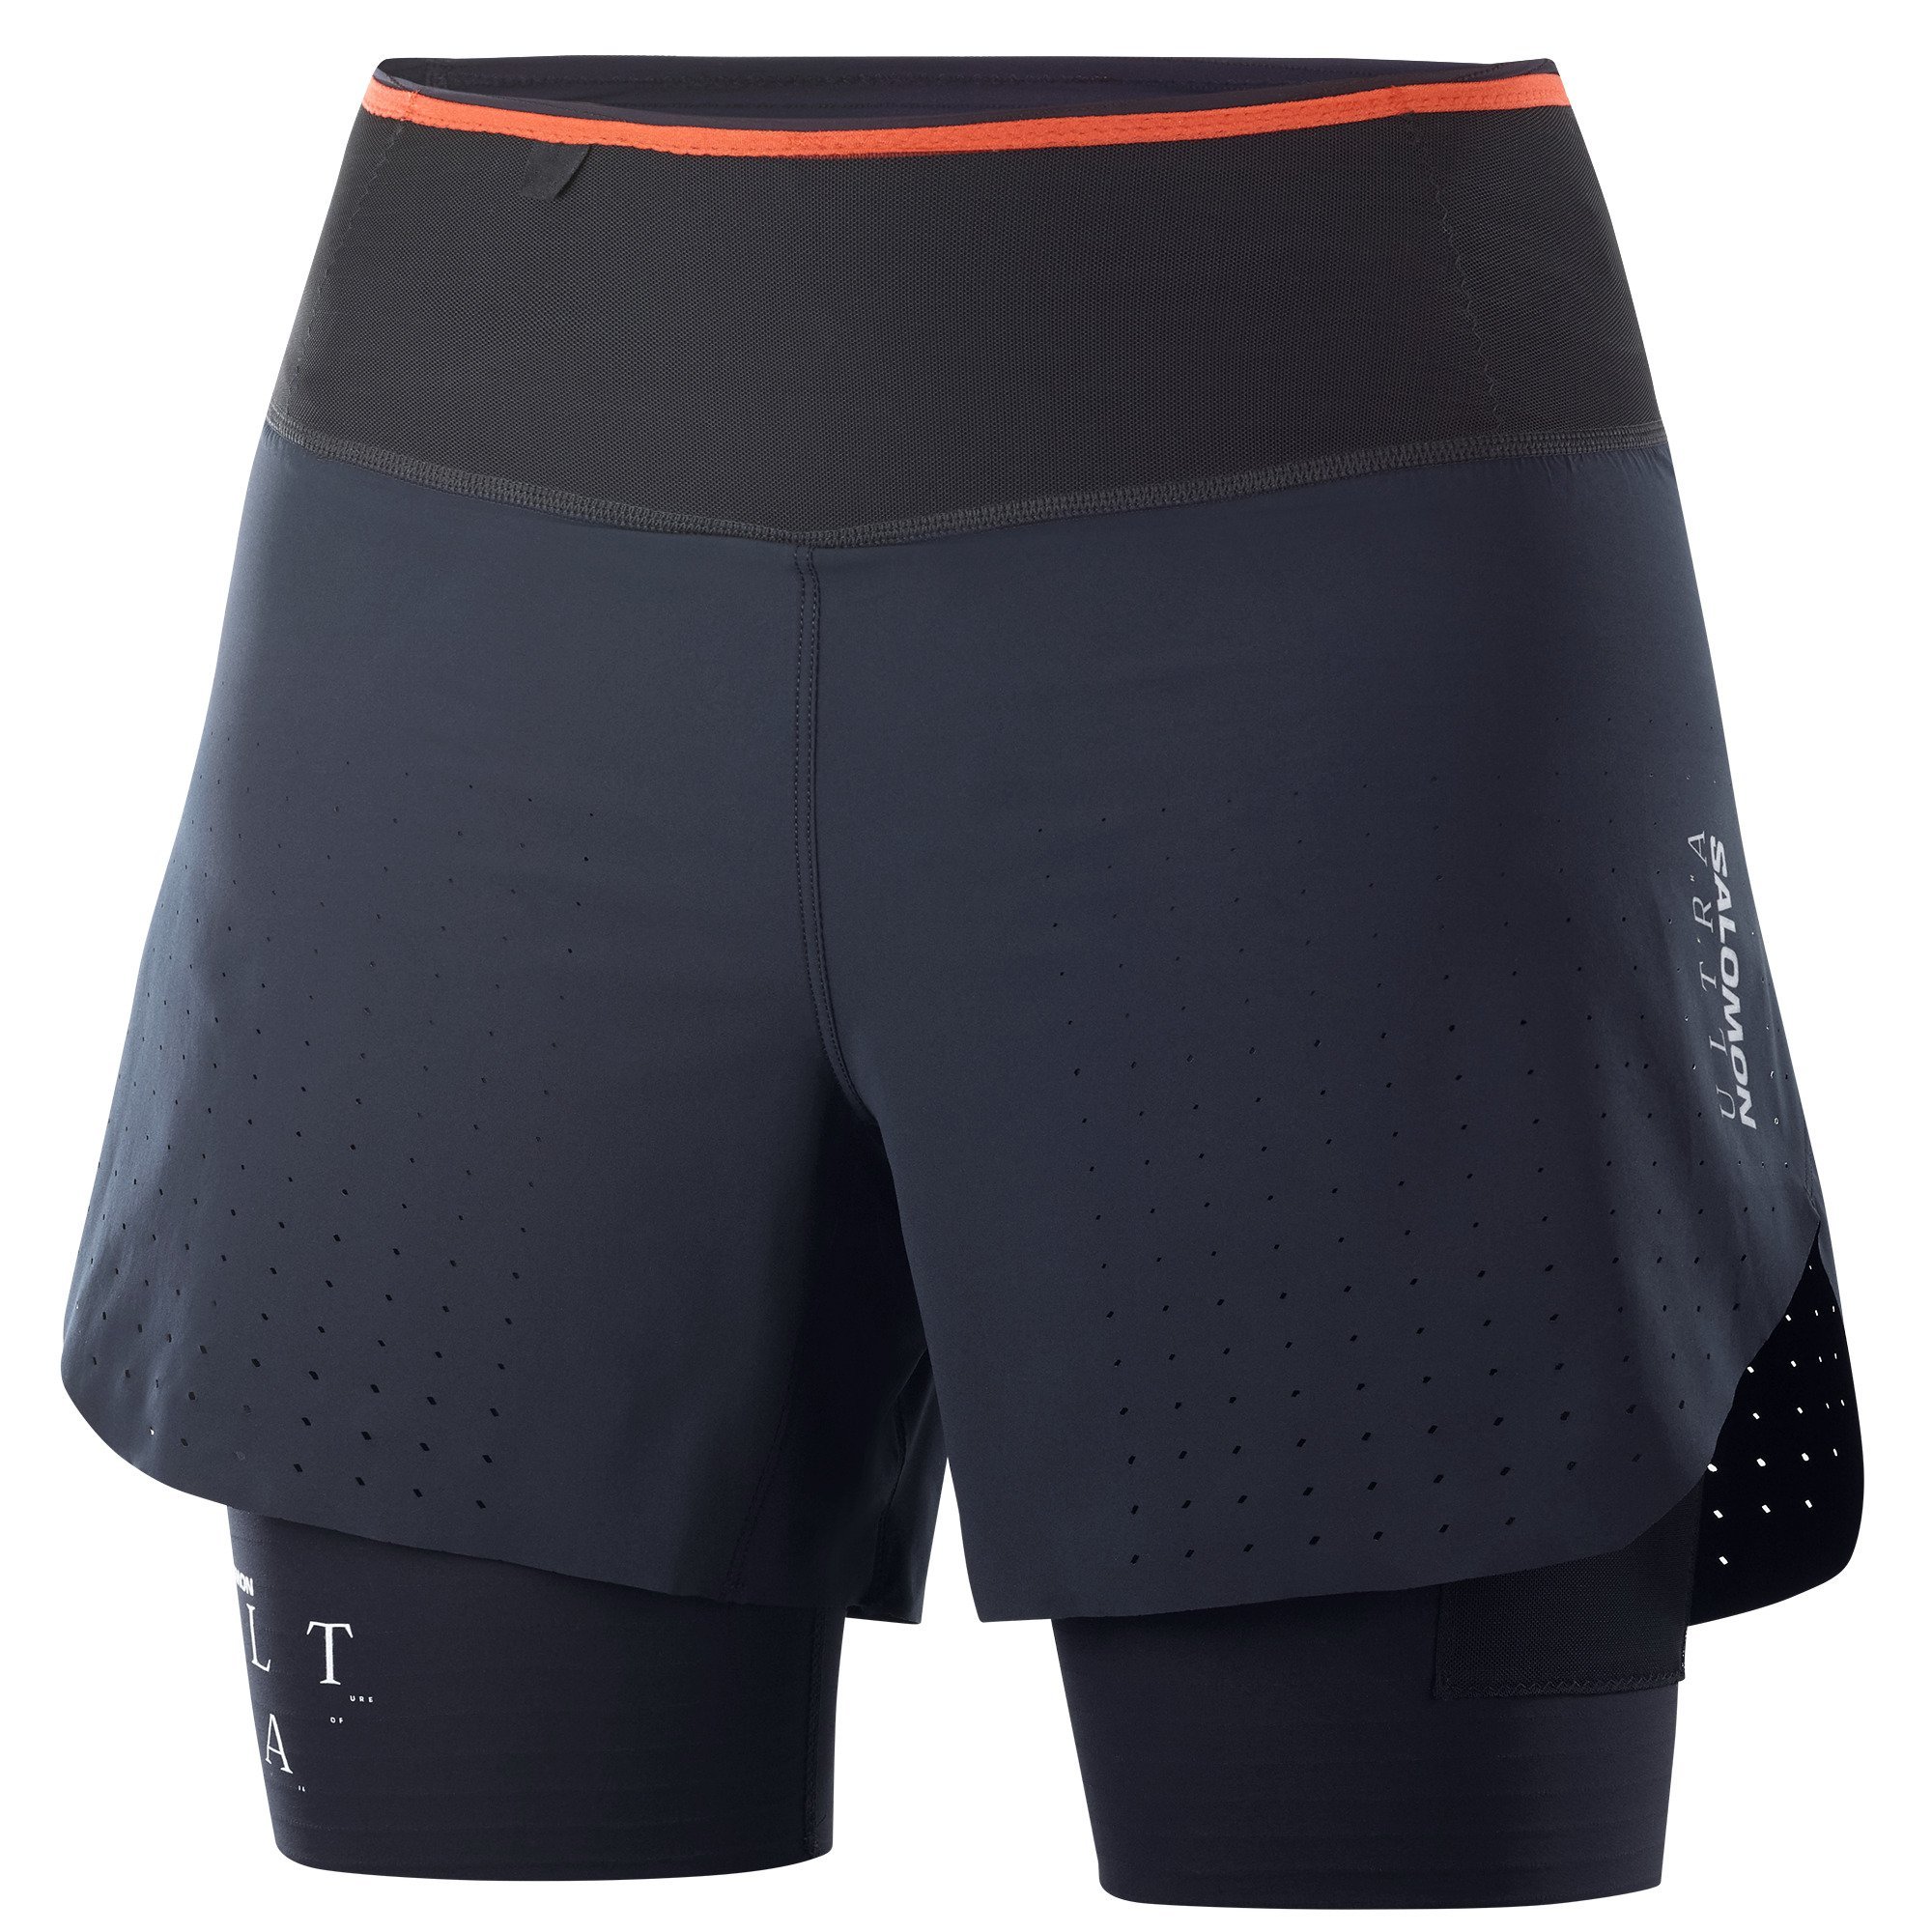 Šortky Salomon S/LAB Ultra 2IN1 Shorts W - modrá